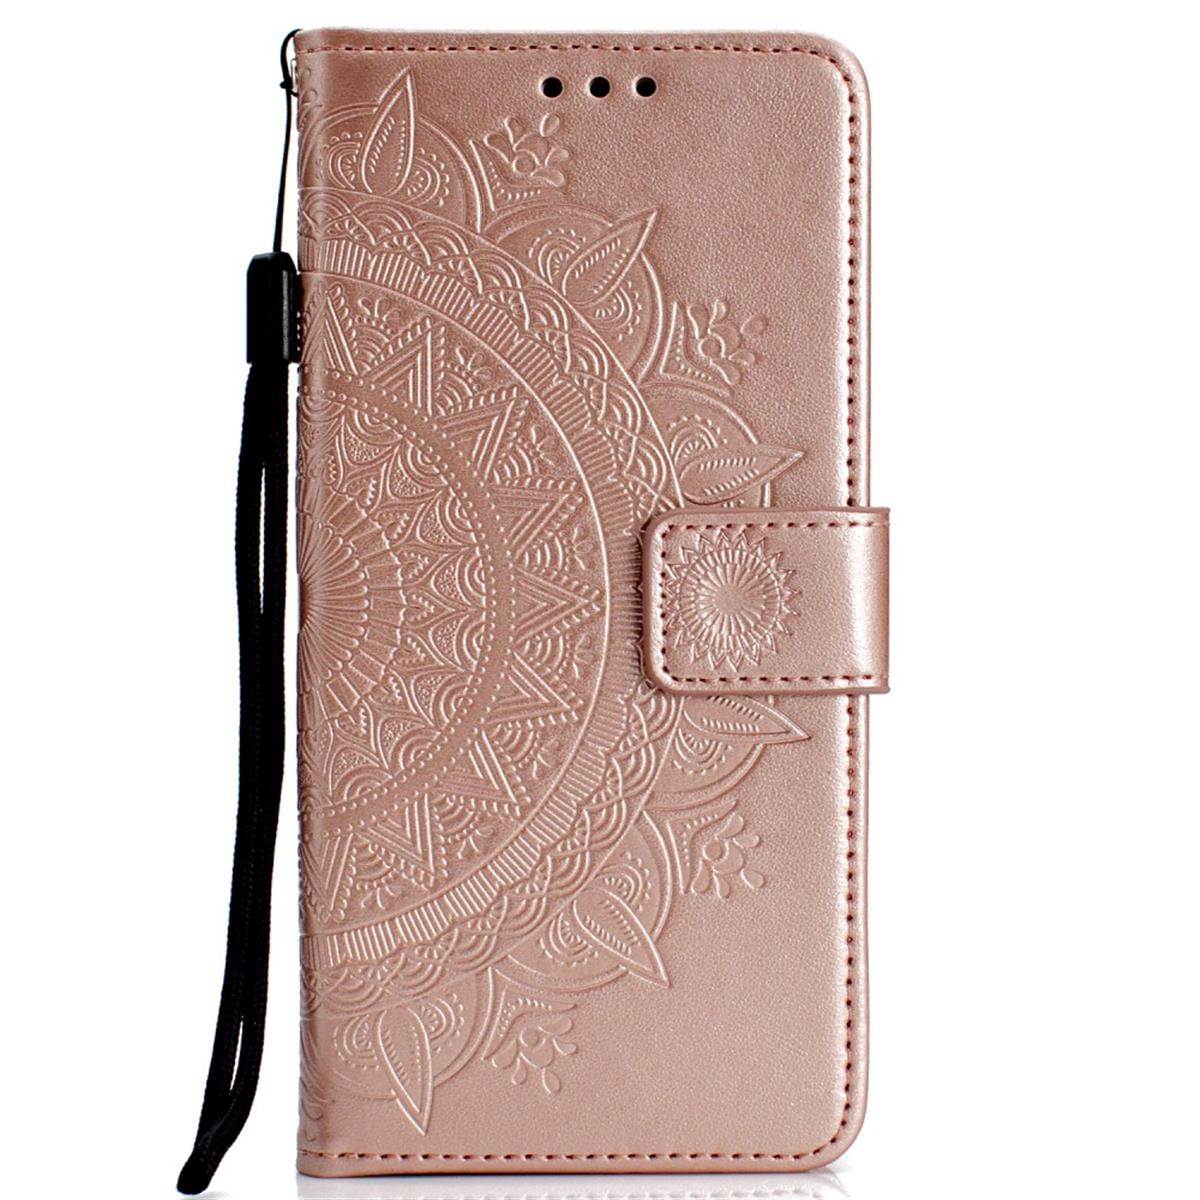 Hülle für Samsung Galaxy J4 2018 Handyhülle Flip Case Schutz Cover Mandala Rose